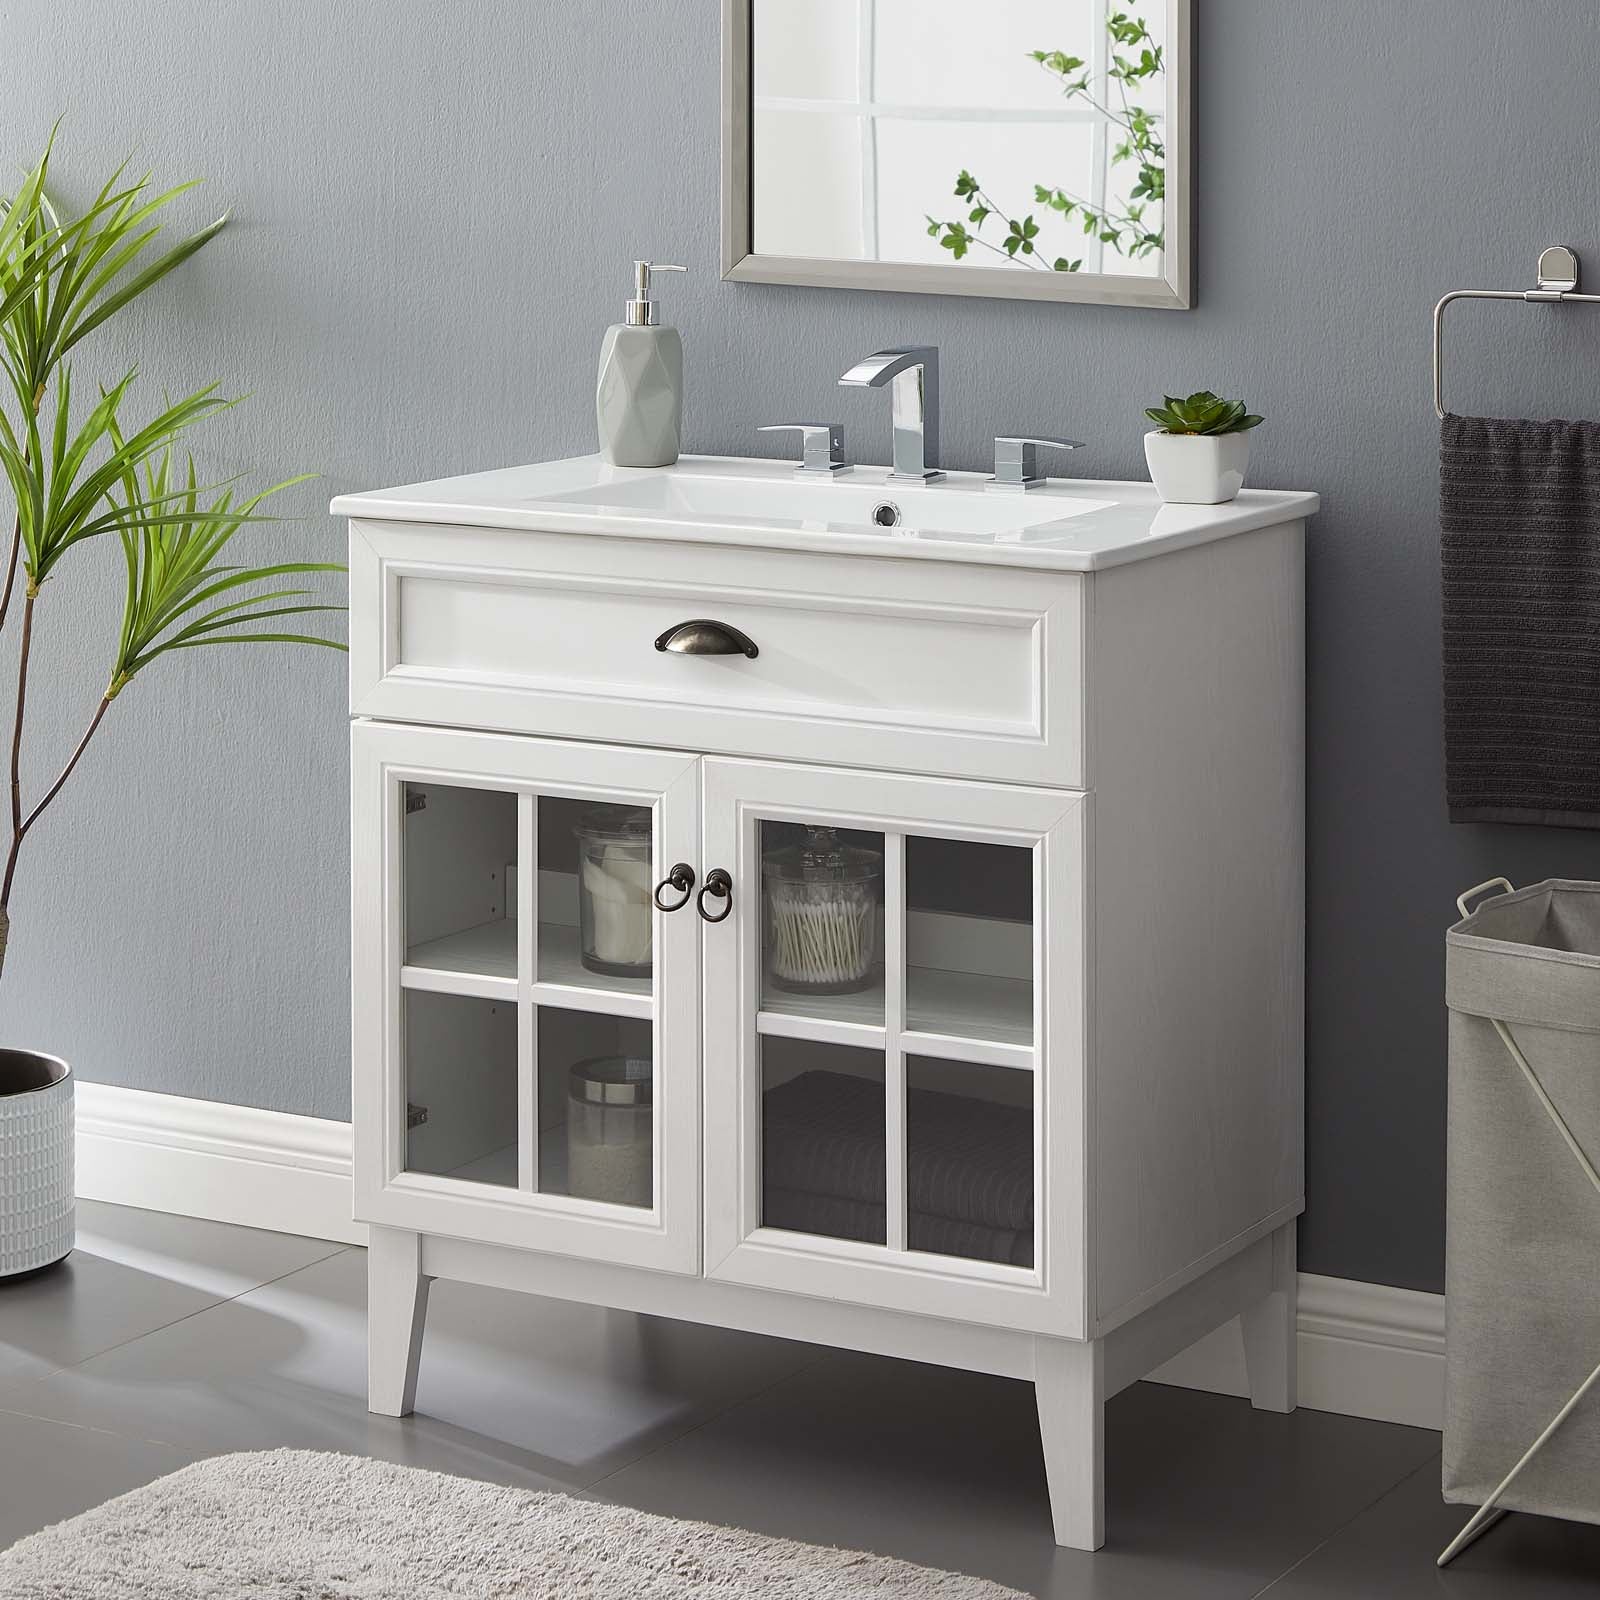 Isle 30" Bathroom Vanity Cabinet - East Shore Modern Home Furnishings